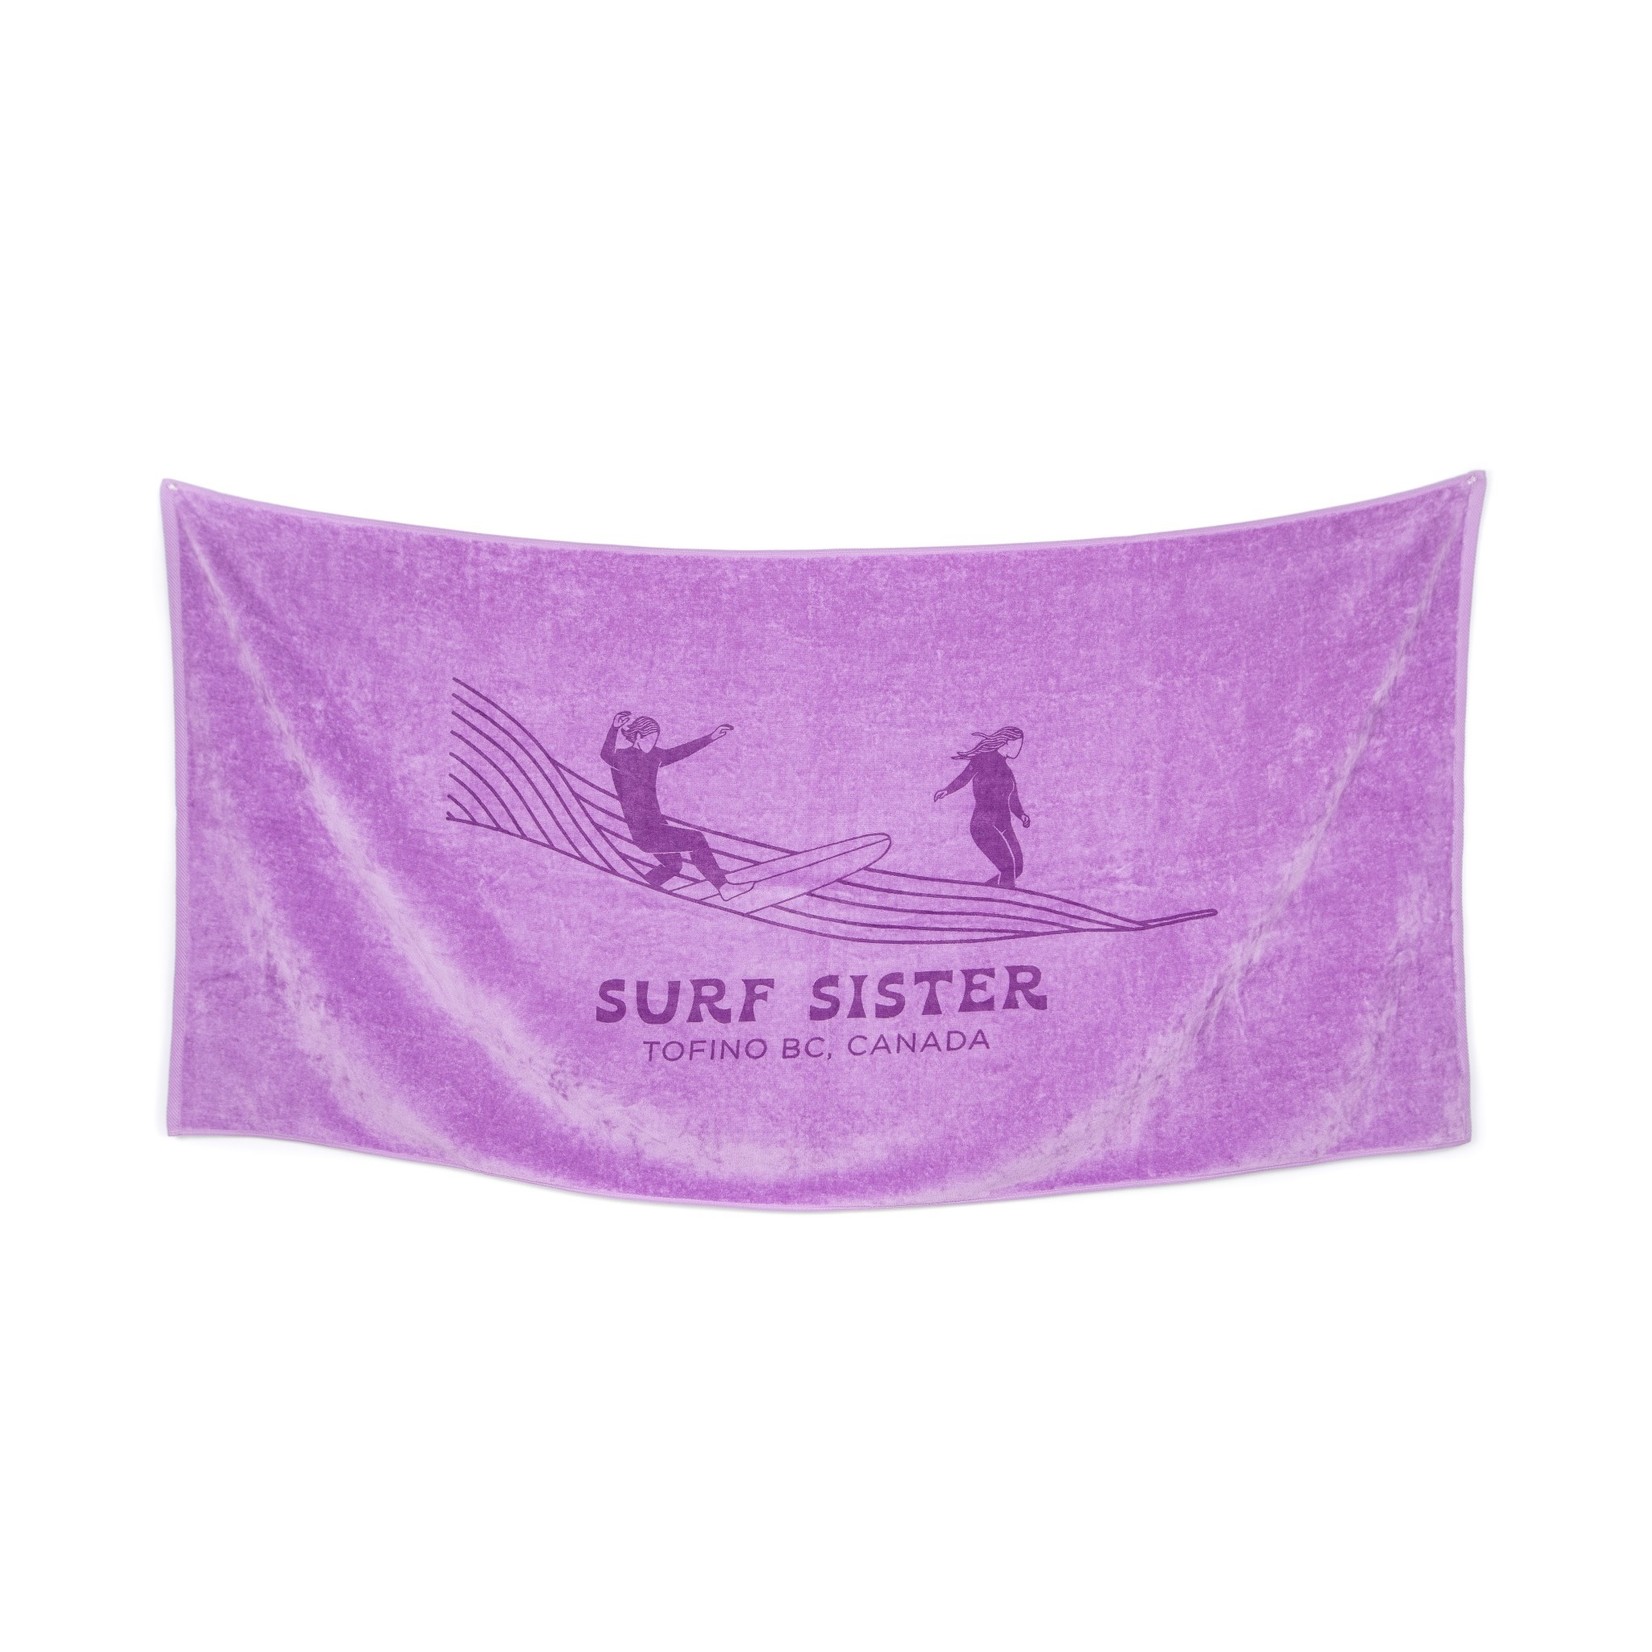 Surf Sister SURF SISTER TOWEL